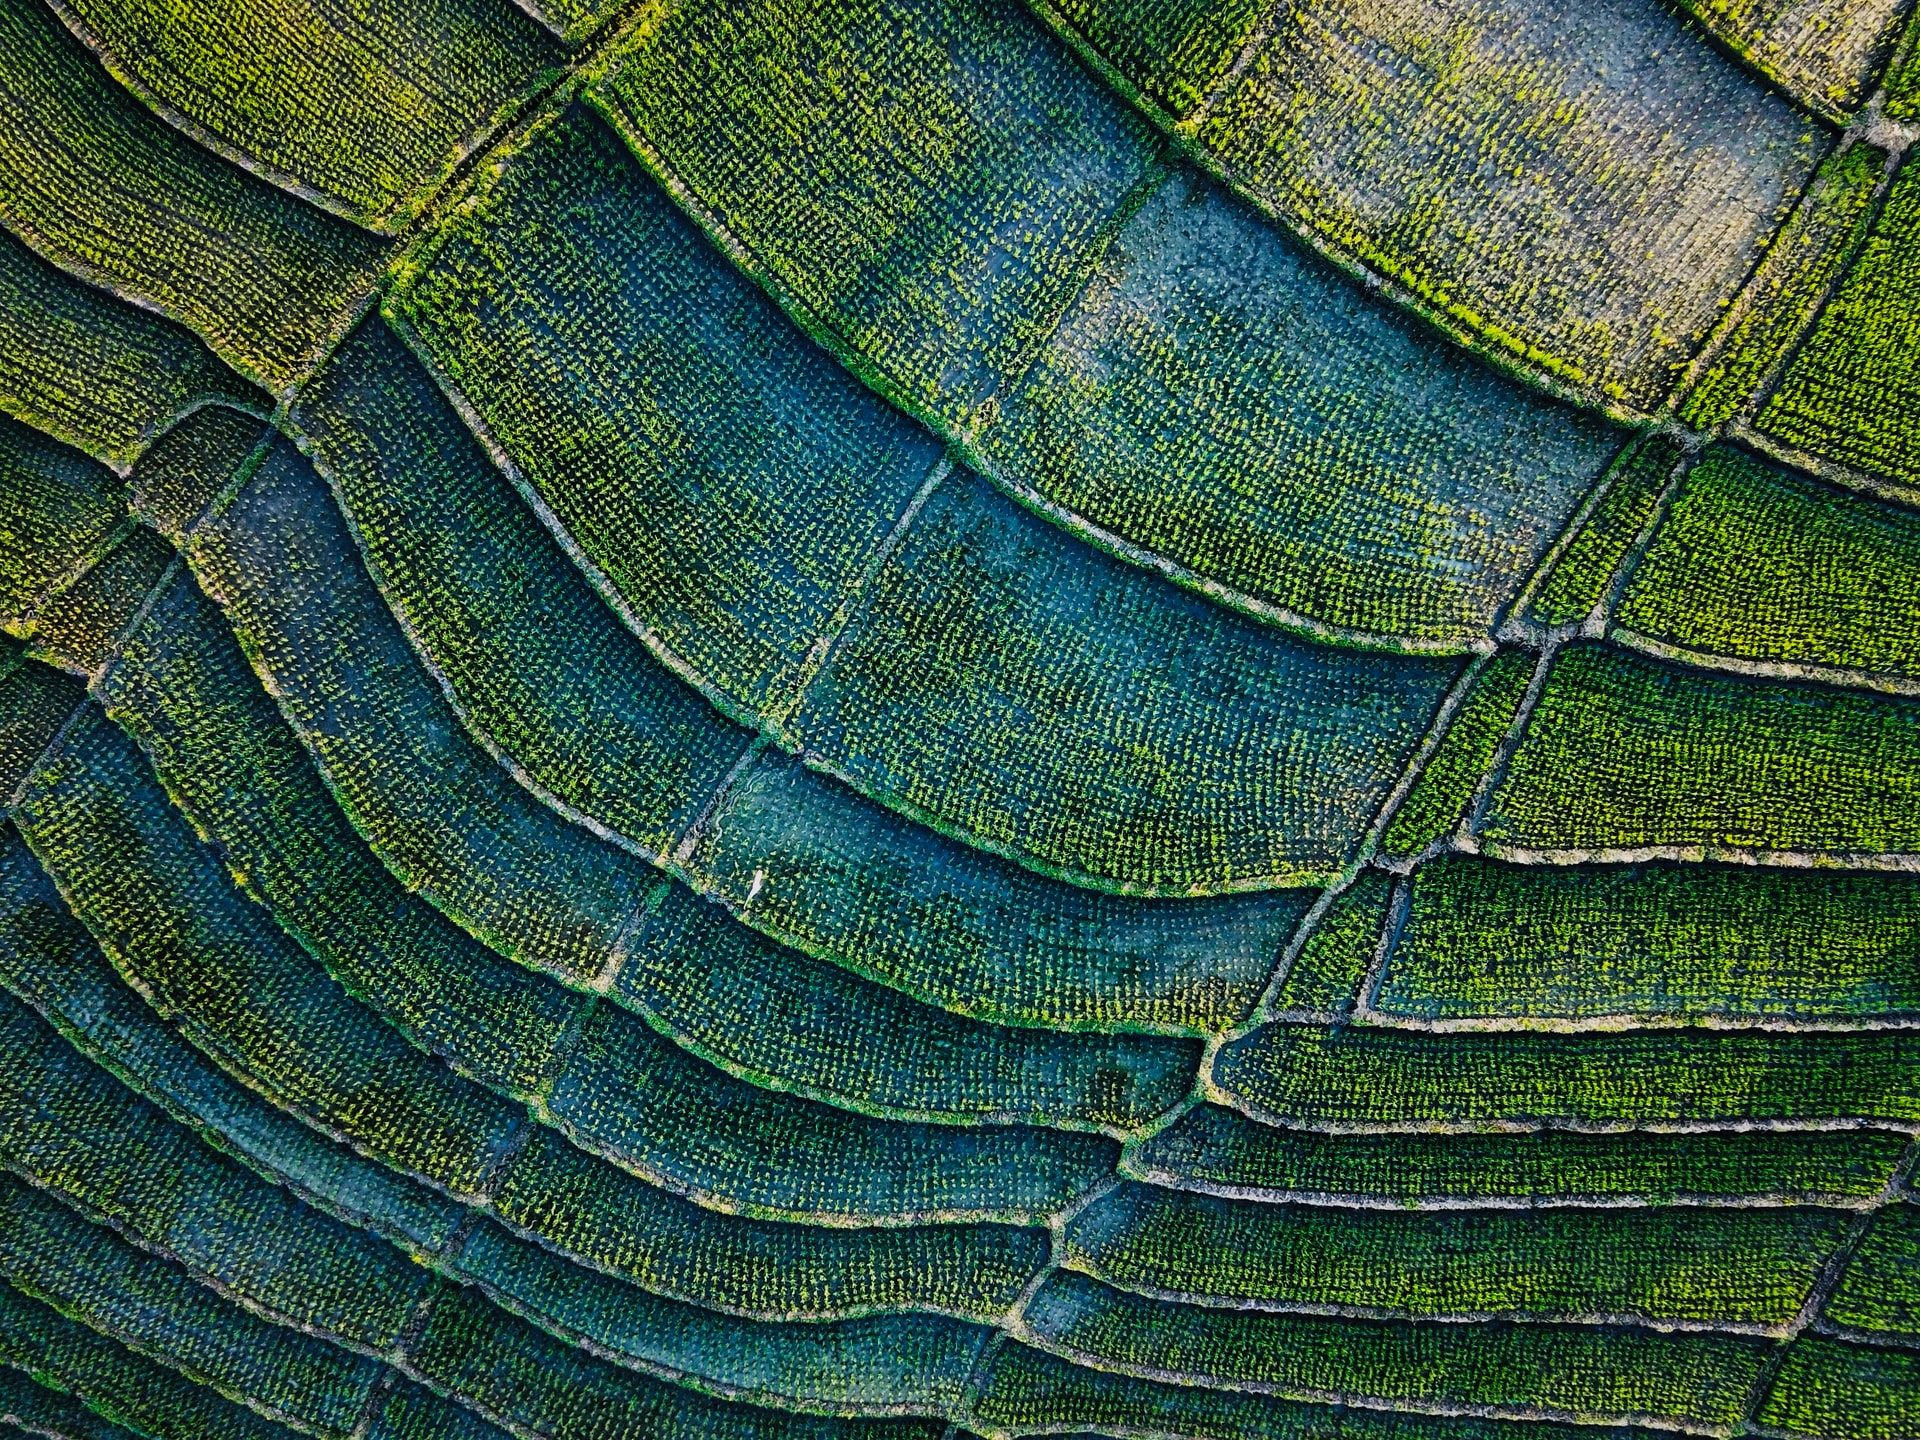 Aerial paddy field texture. Photo by Alexey Marchenko on Unsplash